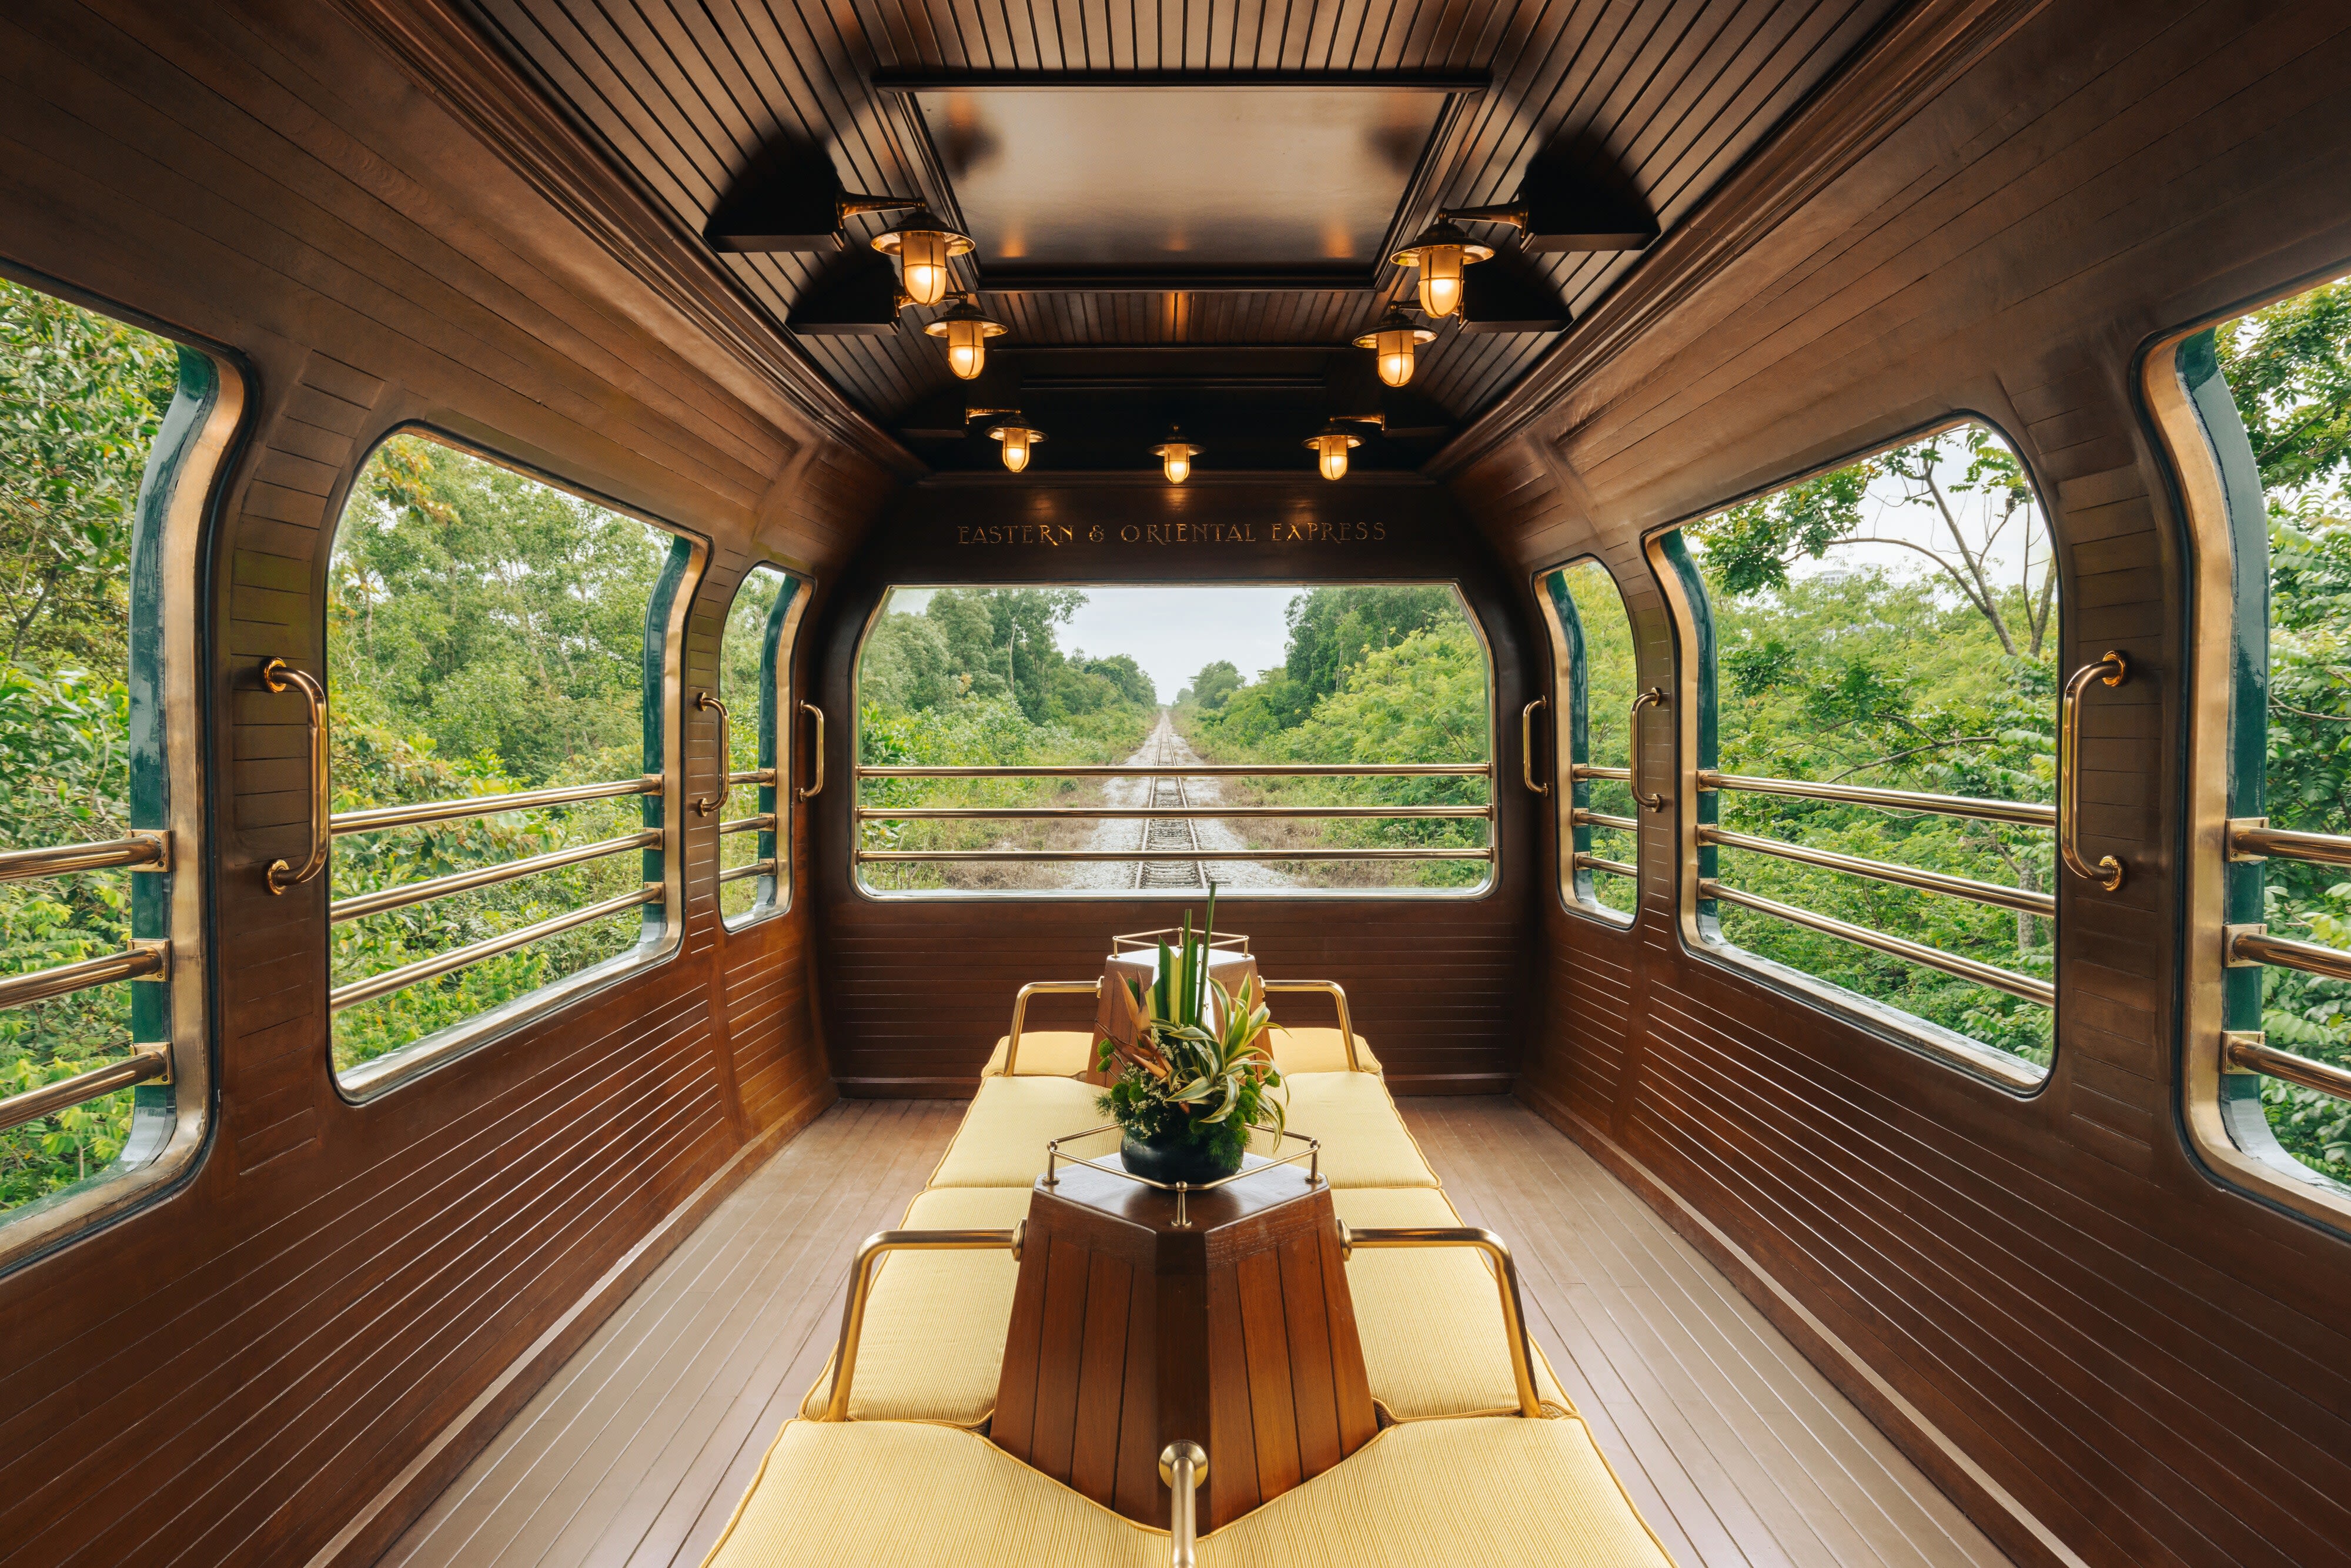 A Journey through the Malaysian Rainforest Aboard the Legendary Eastern & Oriental Express